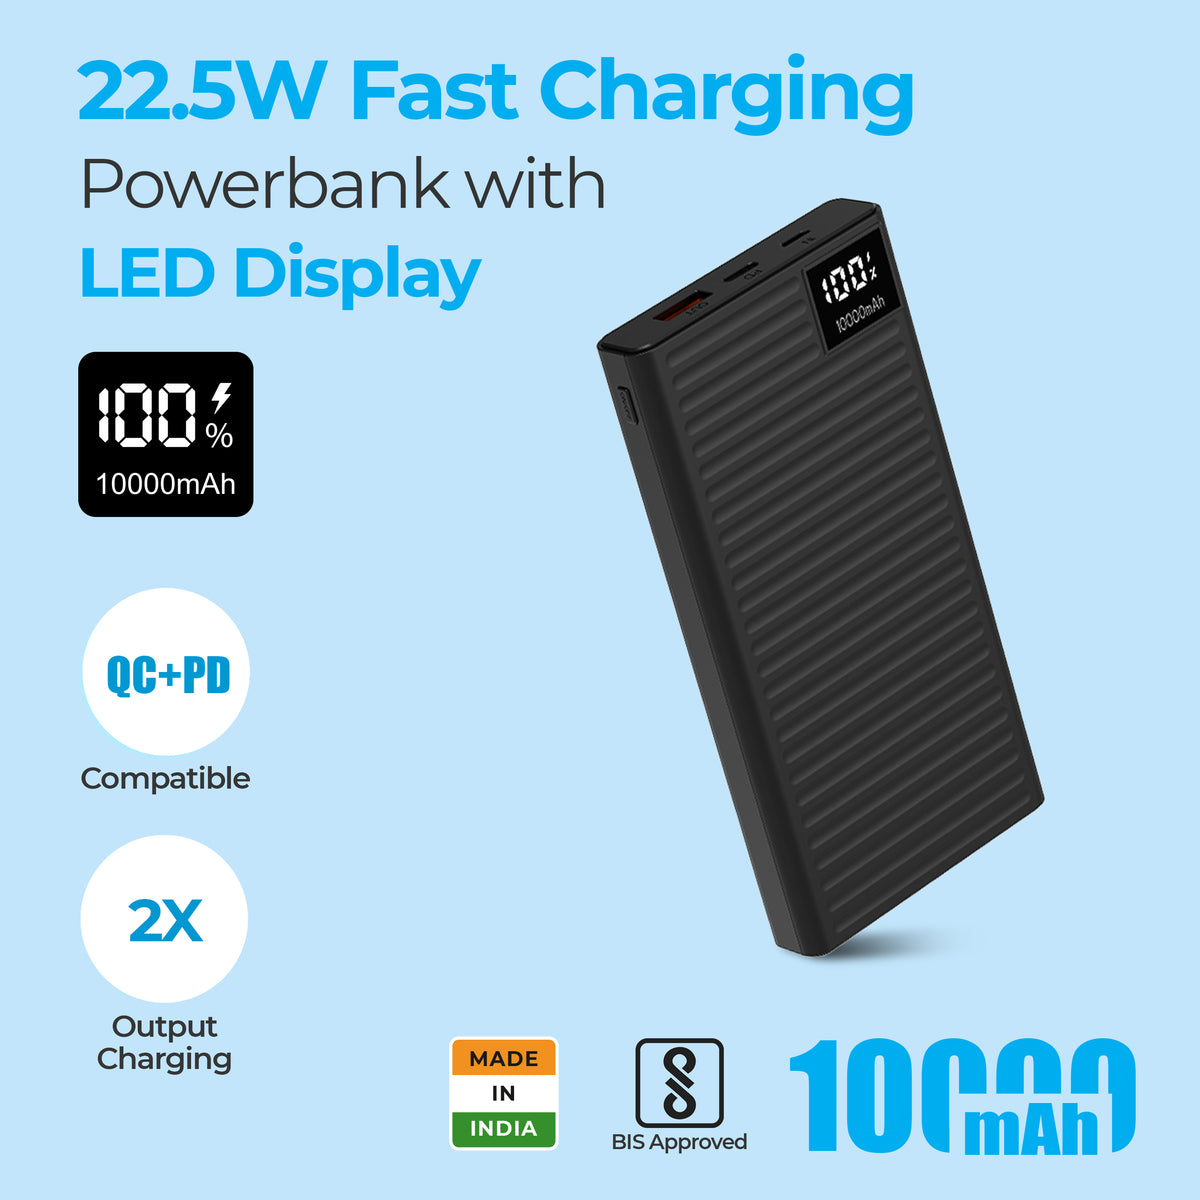 Foxin 22.5W Fast Charging Powerbank 10,000mAh with LED Display, QC+PD Ports, Sleek &amp; Lightweight Travel Essential | Black